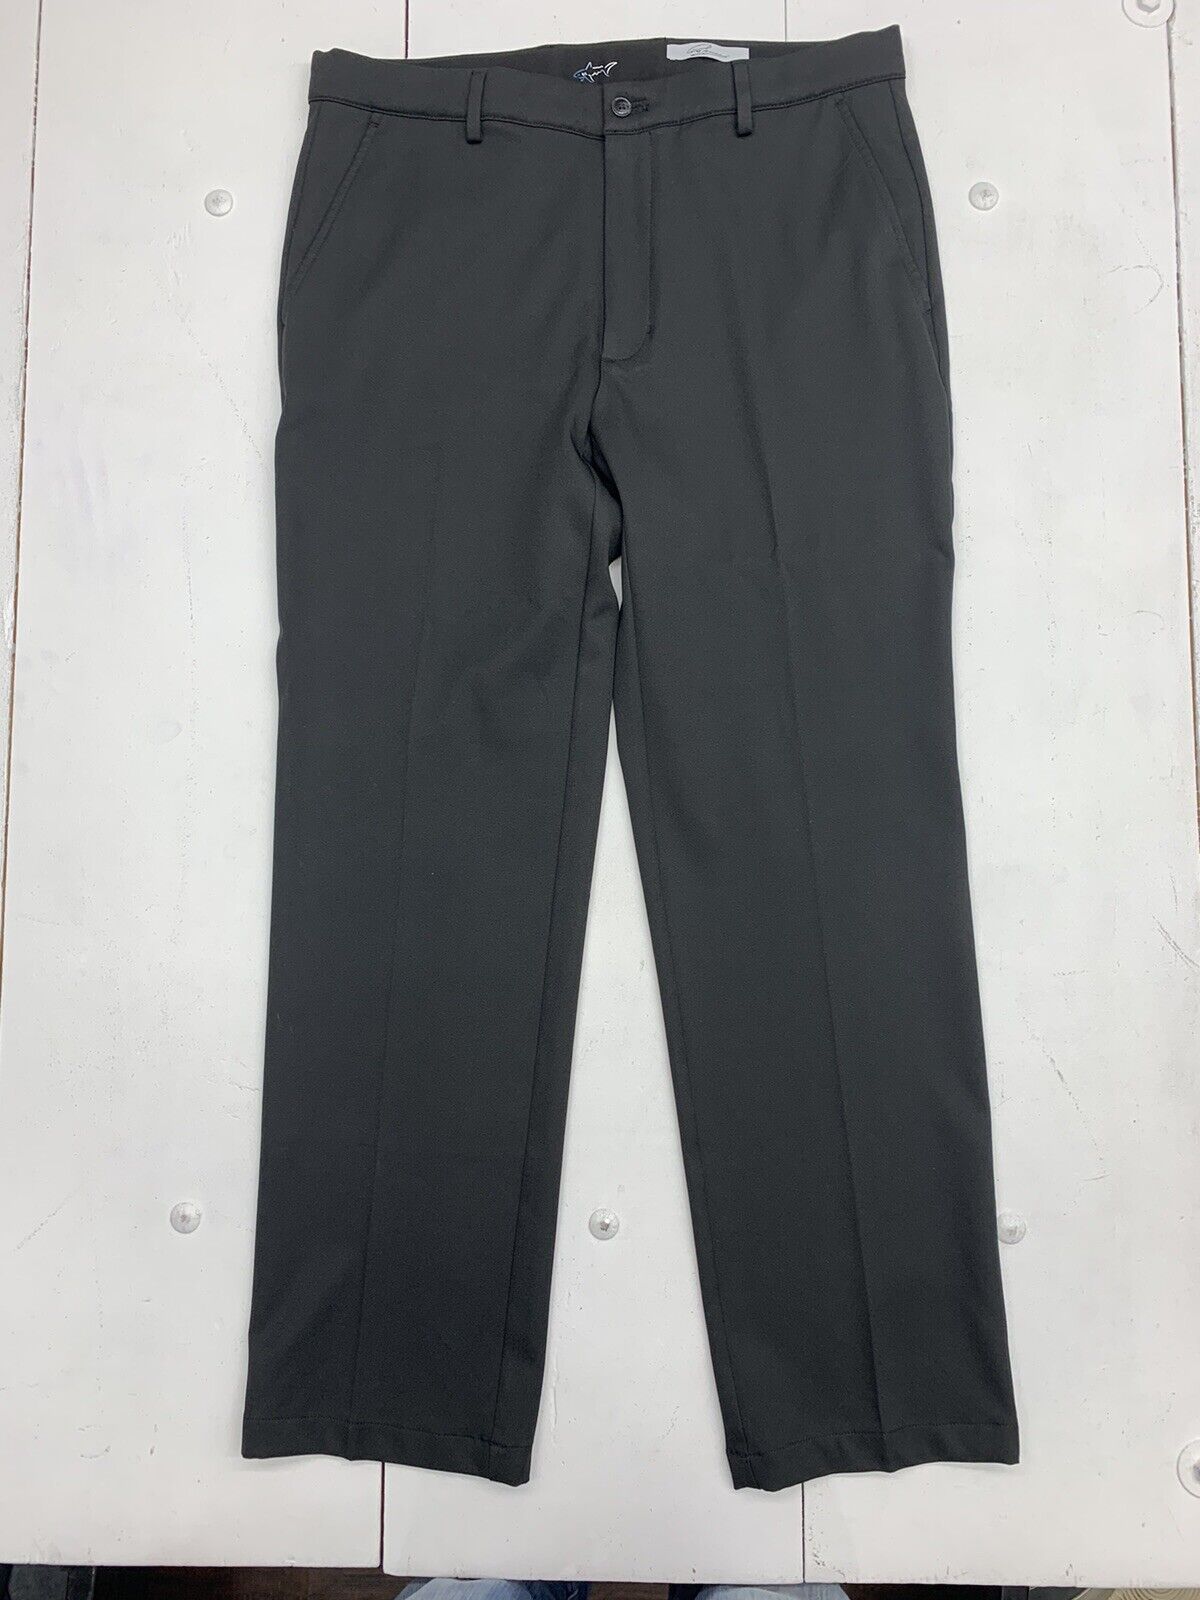 Greg Norman Men's 34x32 5 Pocket Travel Pant Black